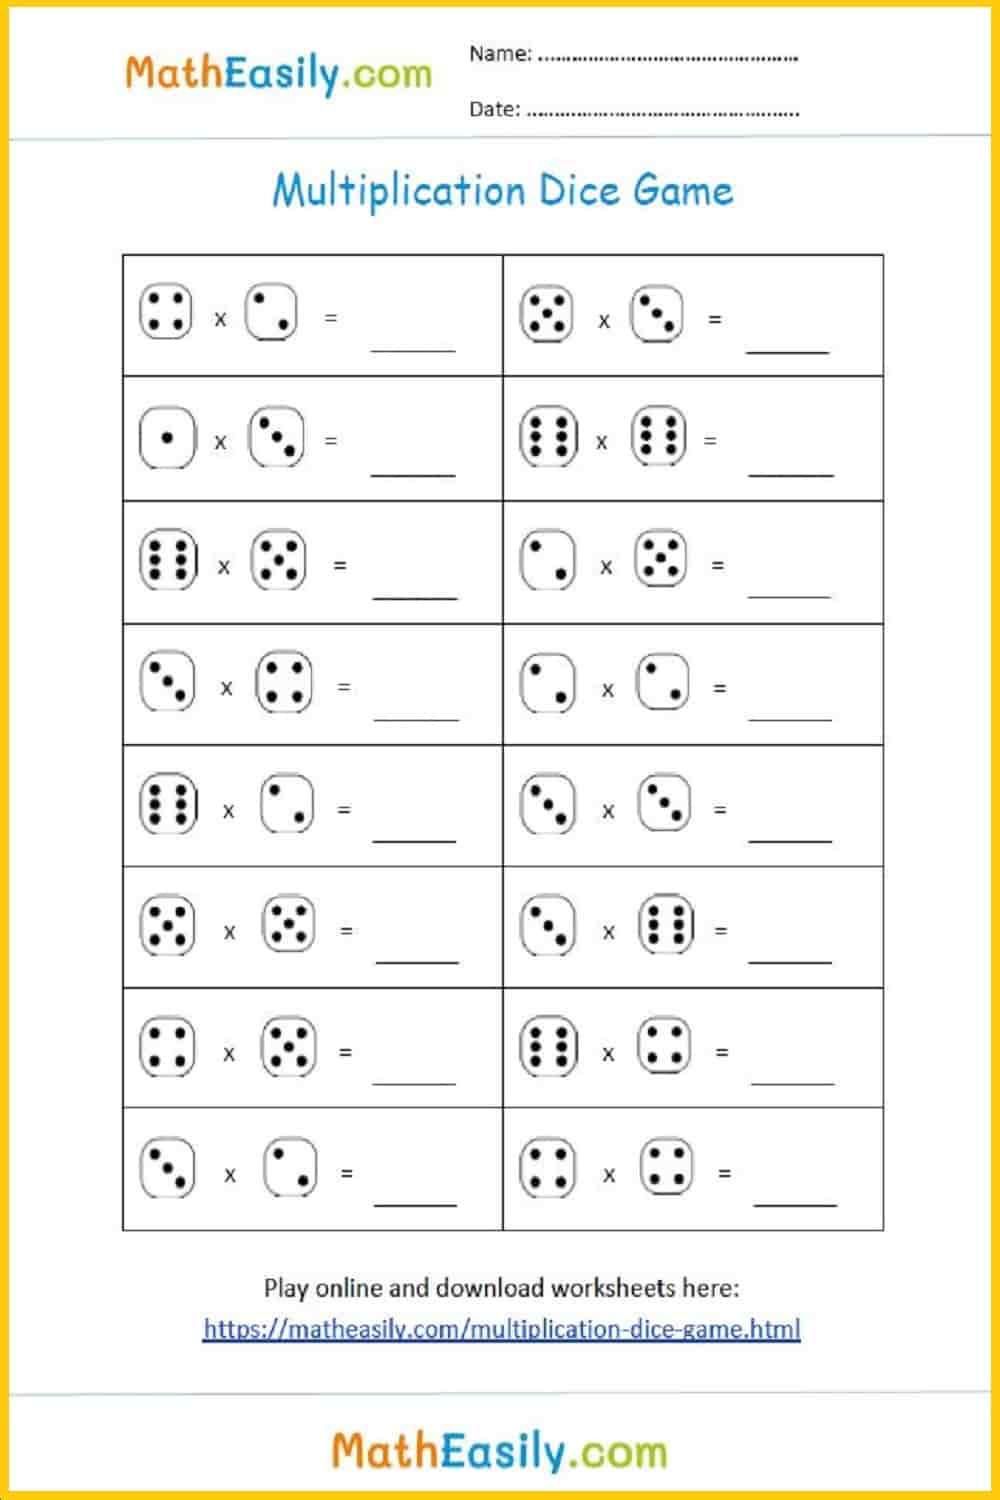 Download our free printable dice multiplication worksheet in PDF.